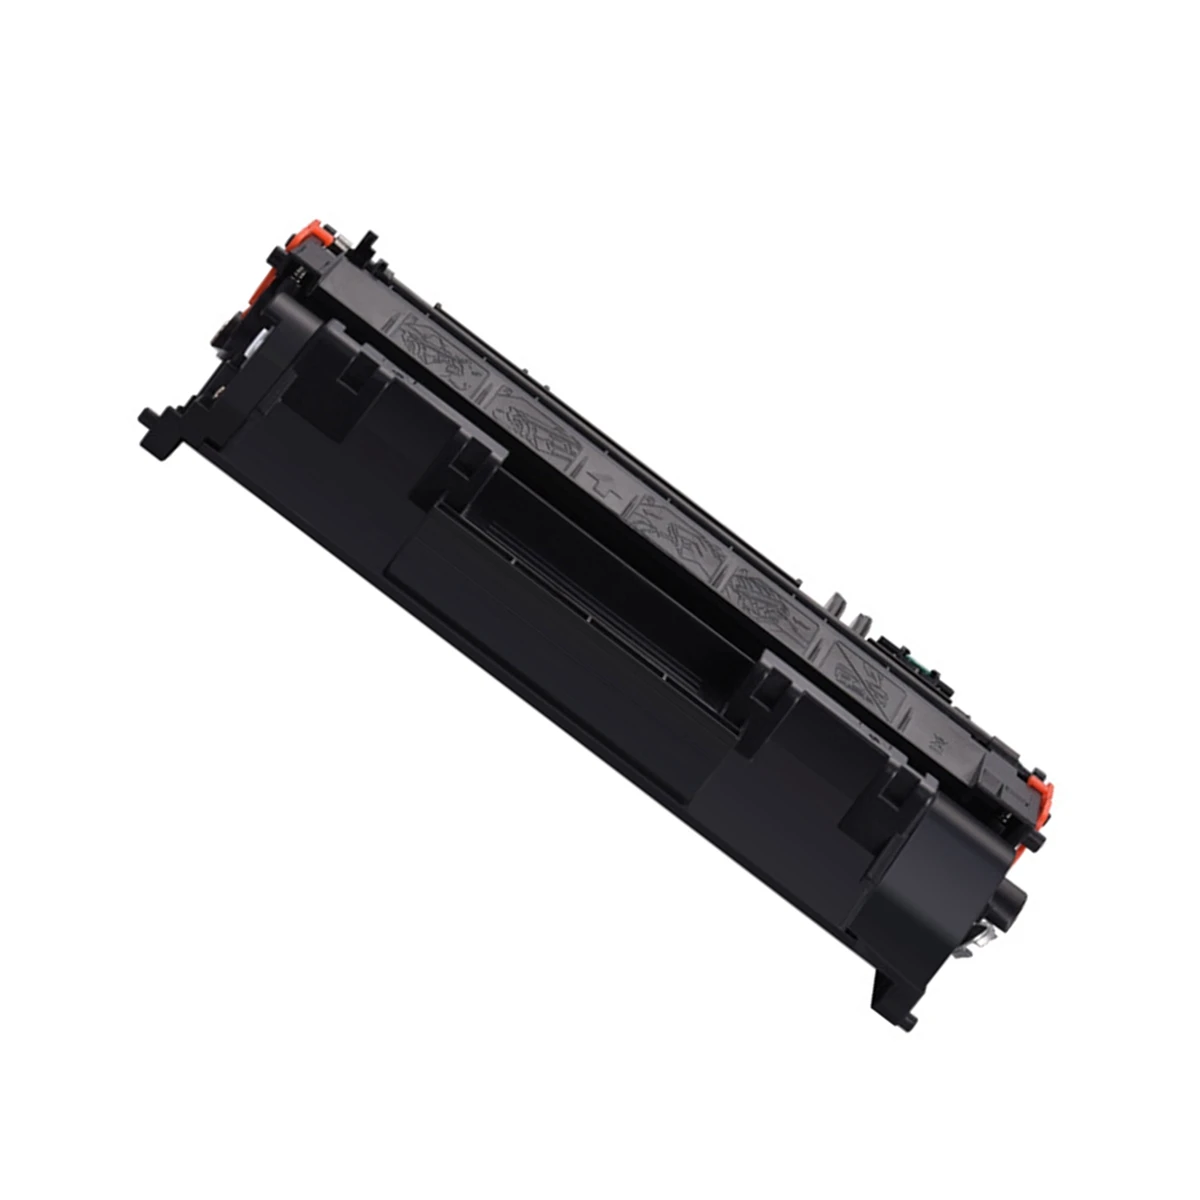 

Compatible for HP 80A CF280A Black Toner Cartridge for HP Laserjet Pro 400/M401/M401Dn/M425/P2035 DwSeries Printers